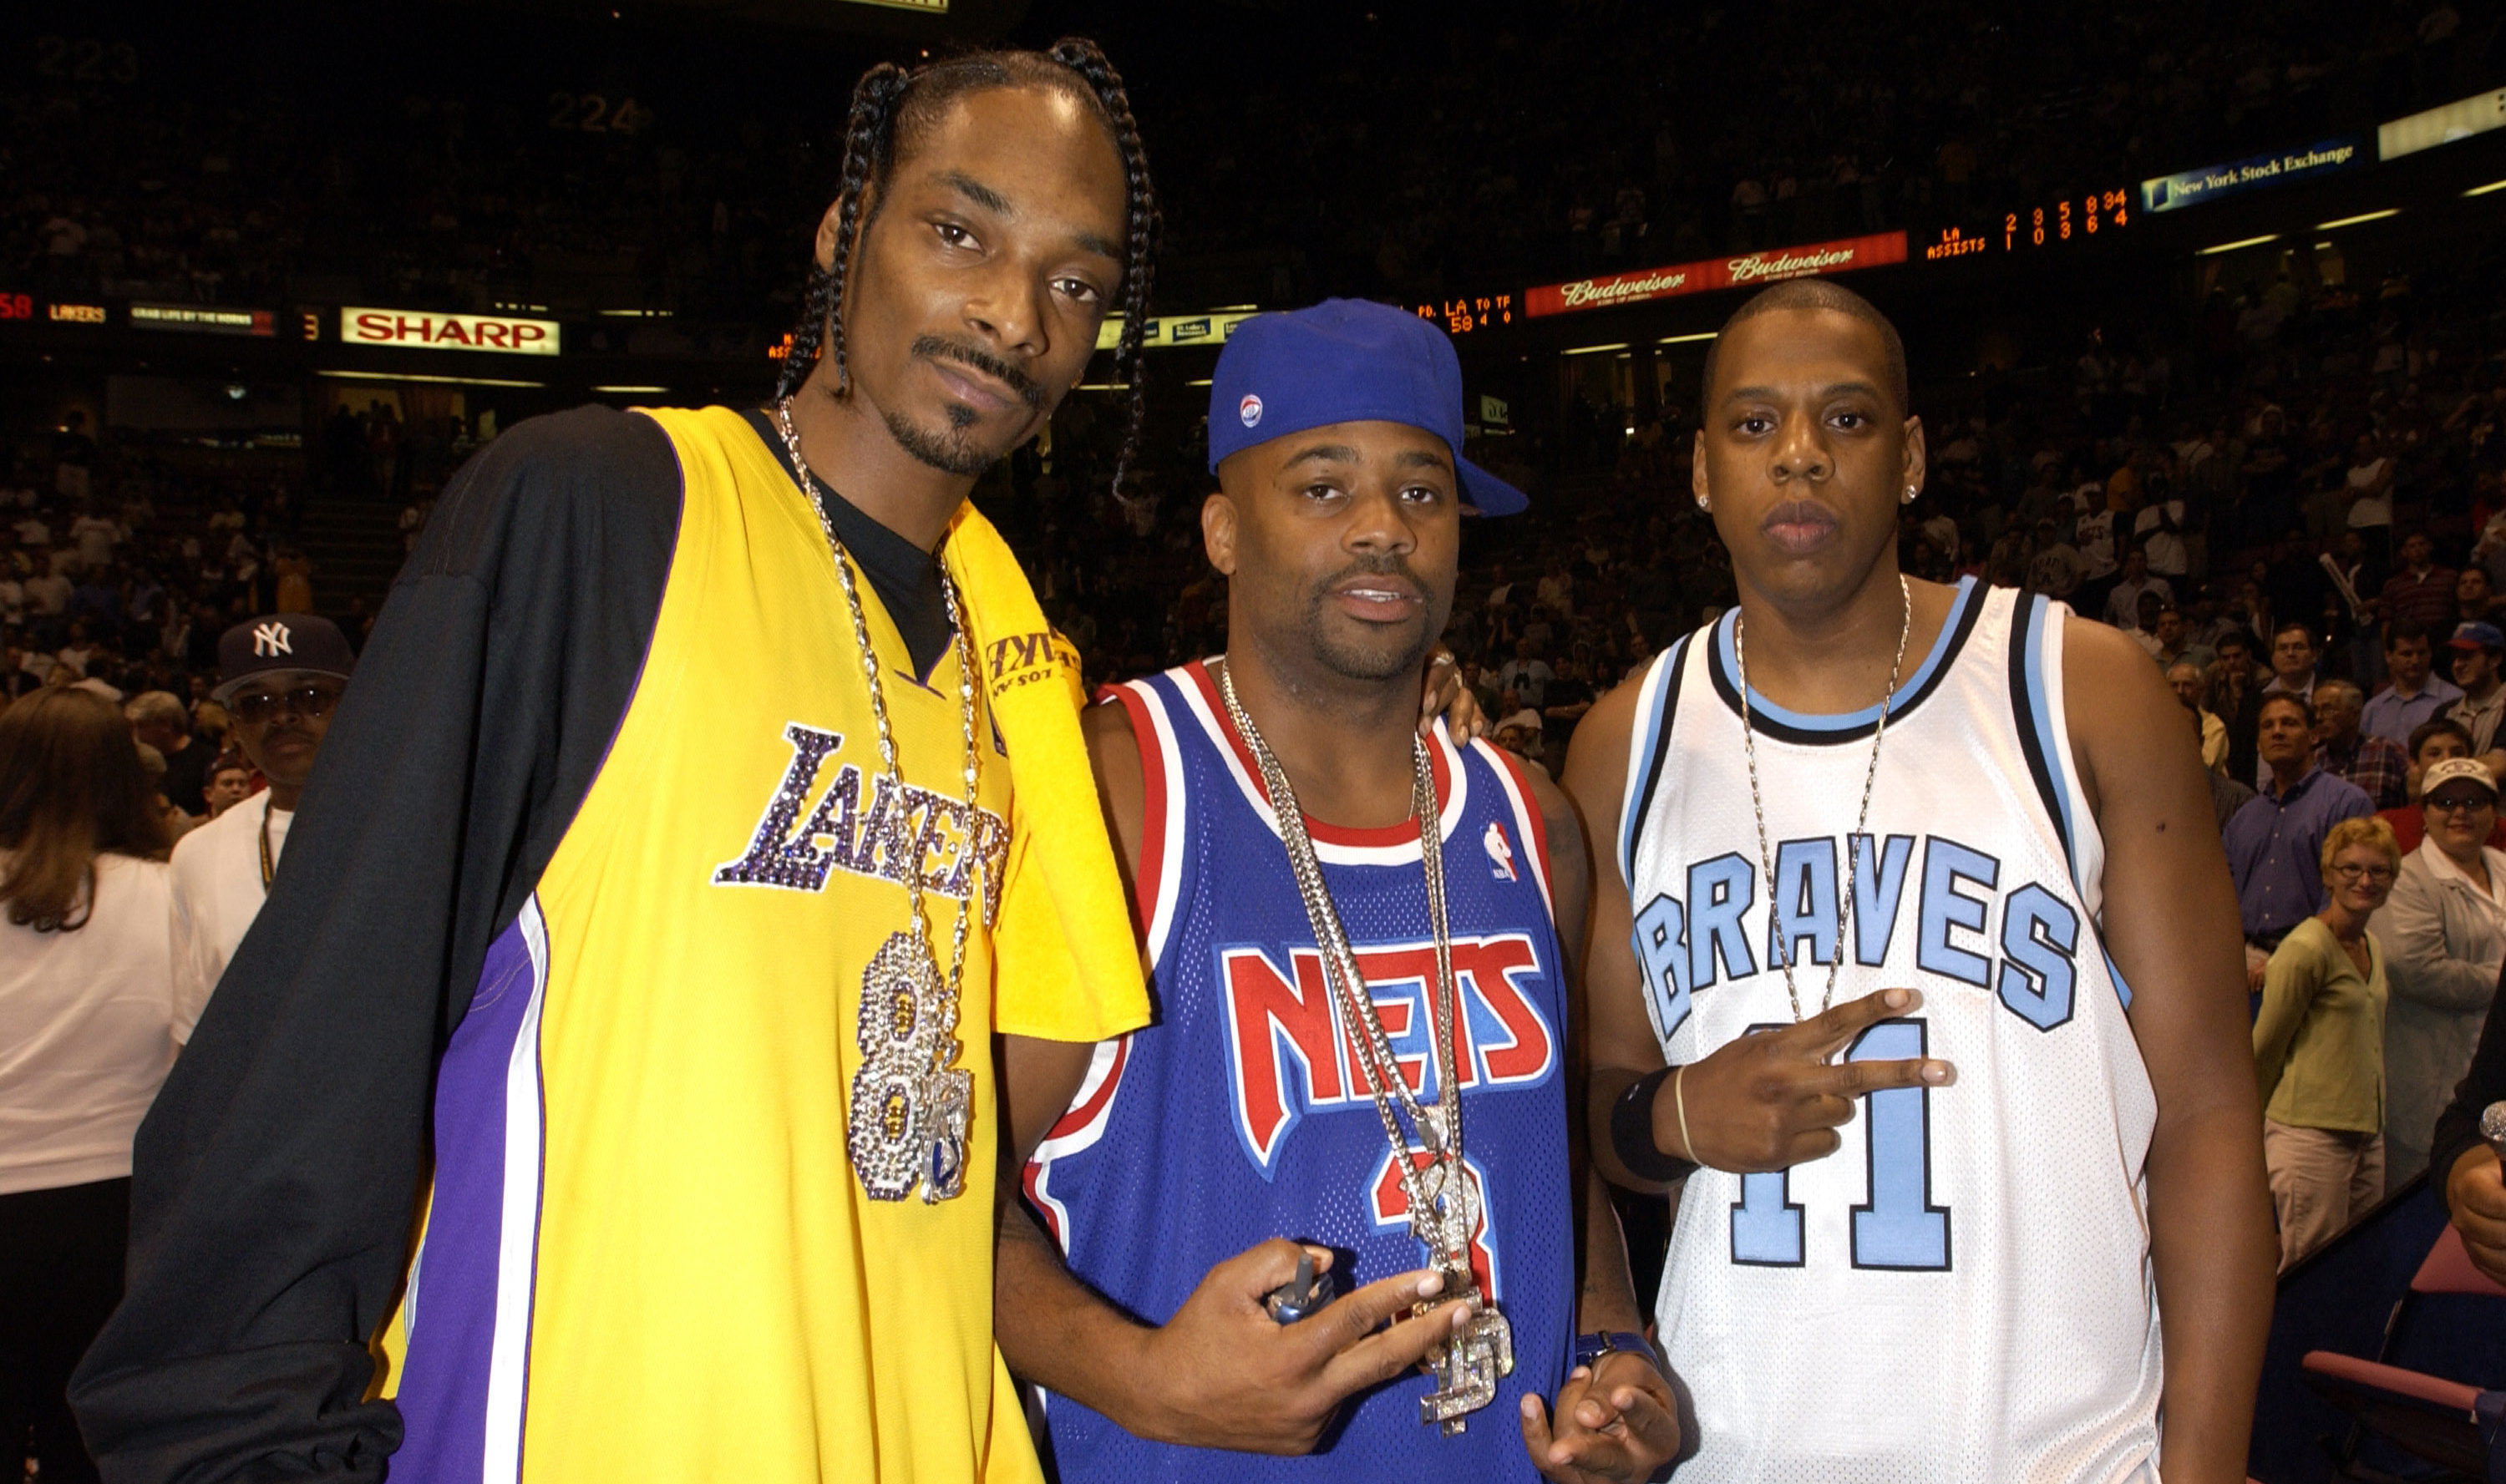 2000s hip hop 90s basketball jersey fashion